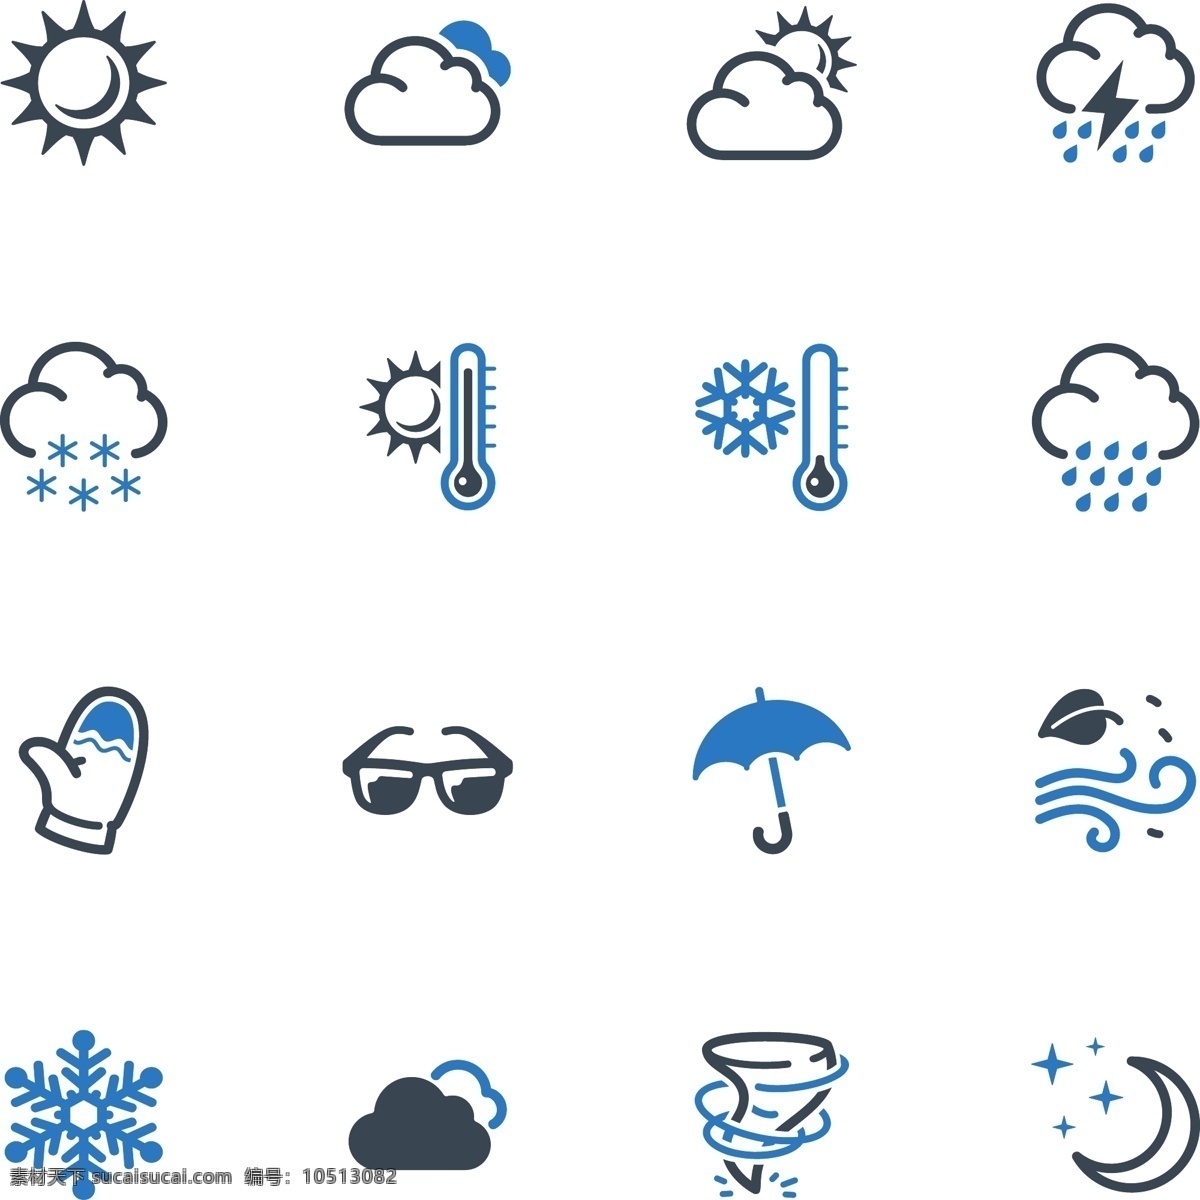 蓝色 线条 冬季 图标 icon icon图标 icon下载 雪花icon 雨伞 手套 墨镜icon